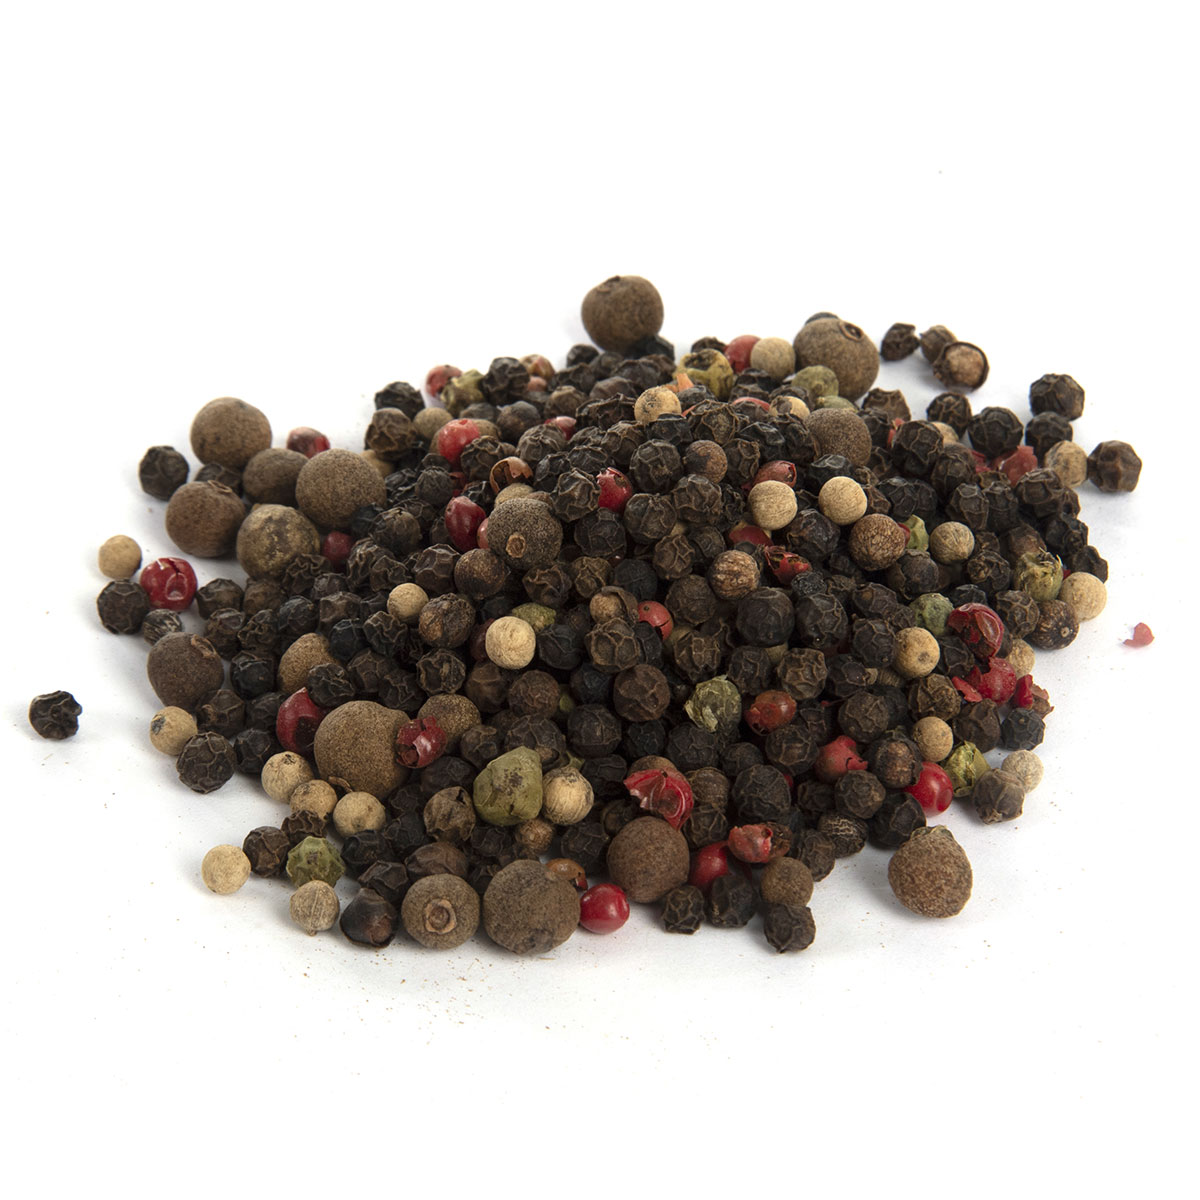 Buy Spices in Bulk - Five Pepper Seasoning